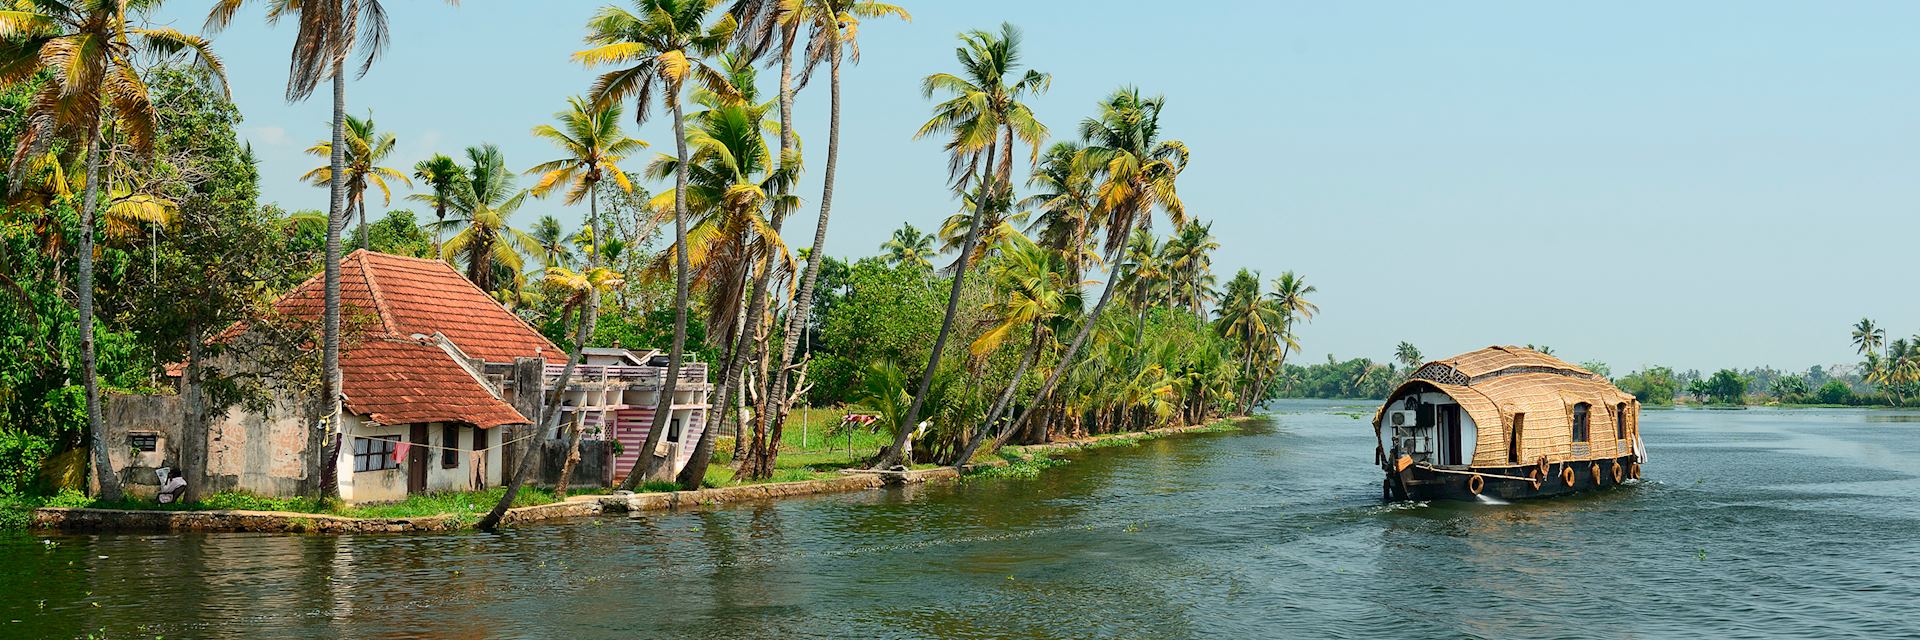 Houseboat on the Kerala backwaters